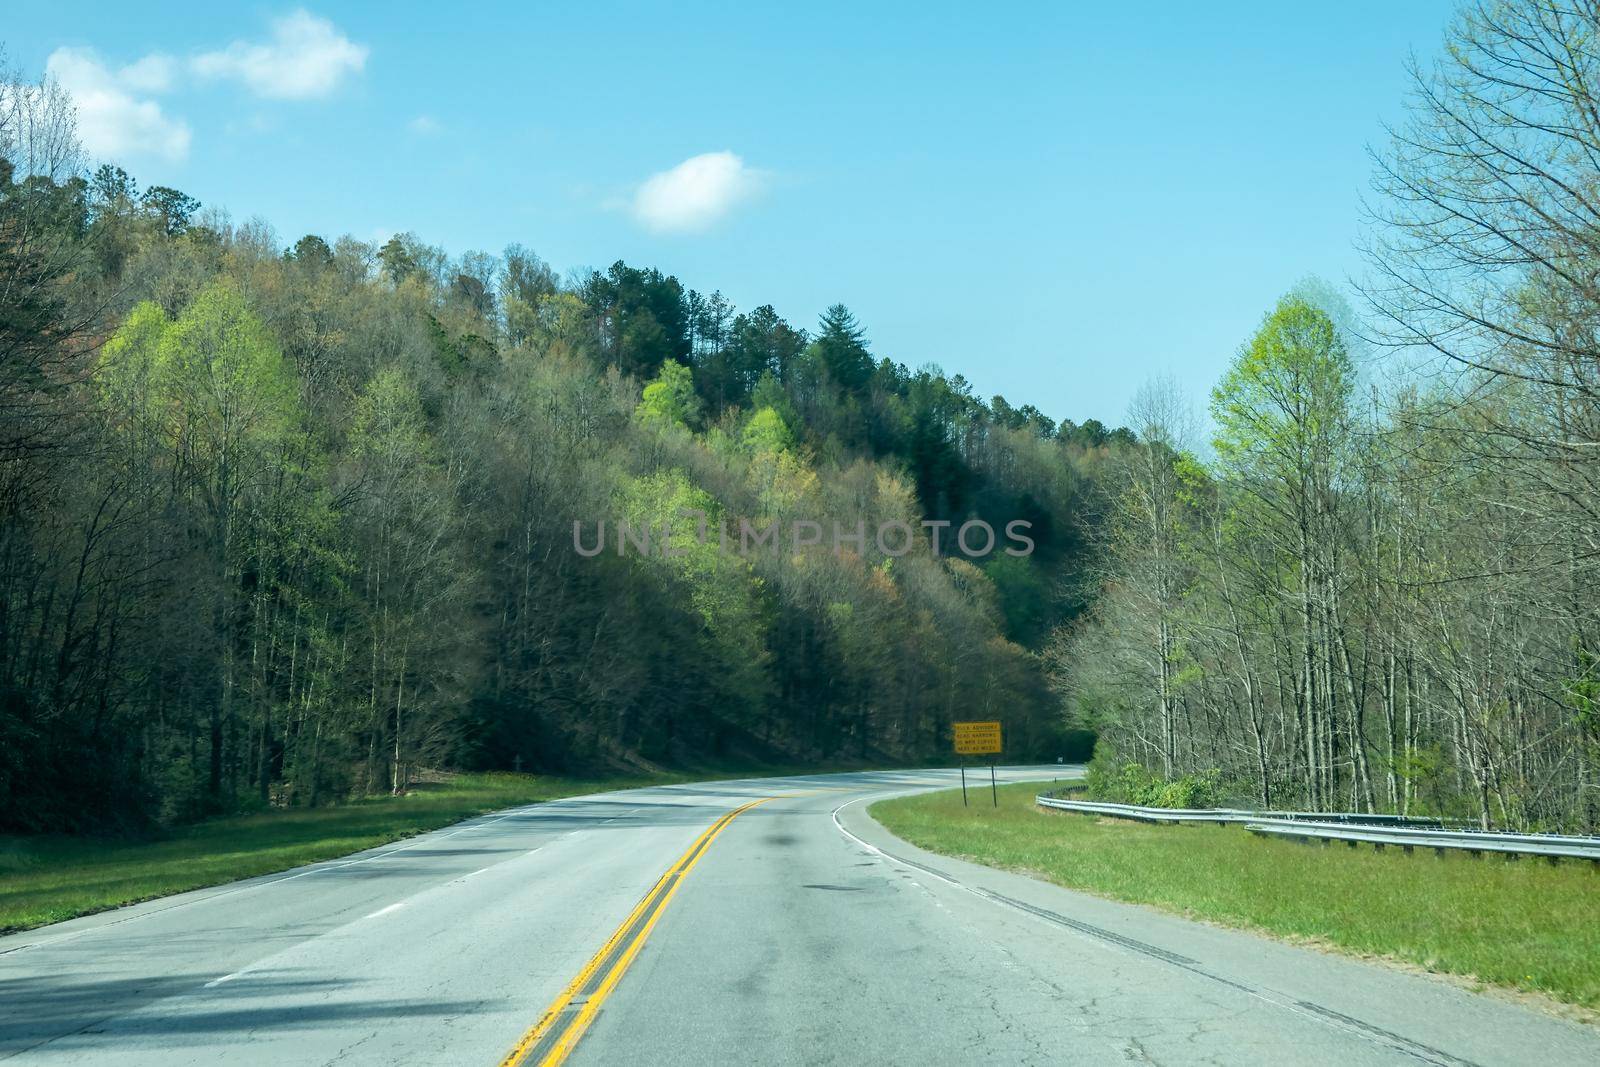 freeway travel trhough mountain hghlands of south carolina by digidreamgrafix